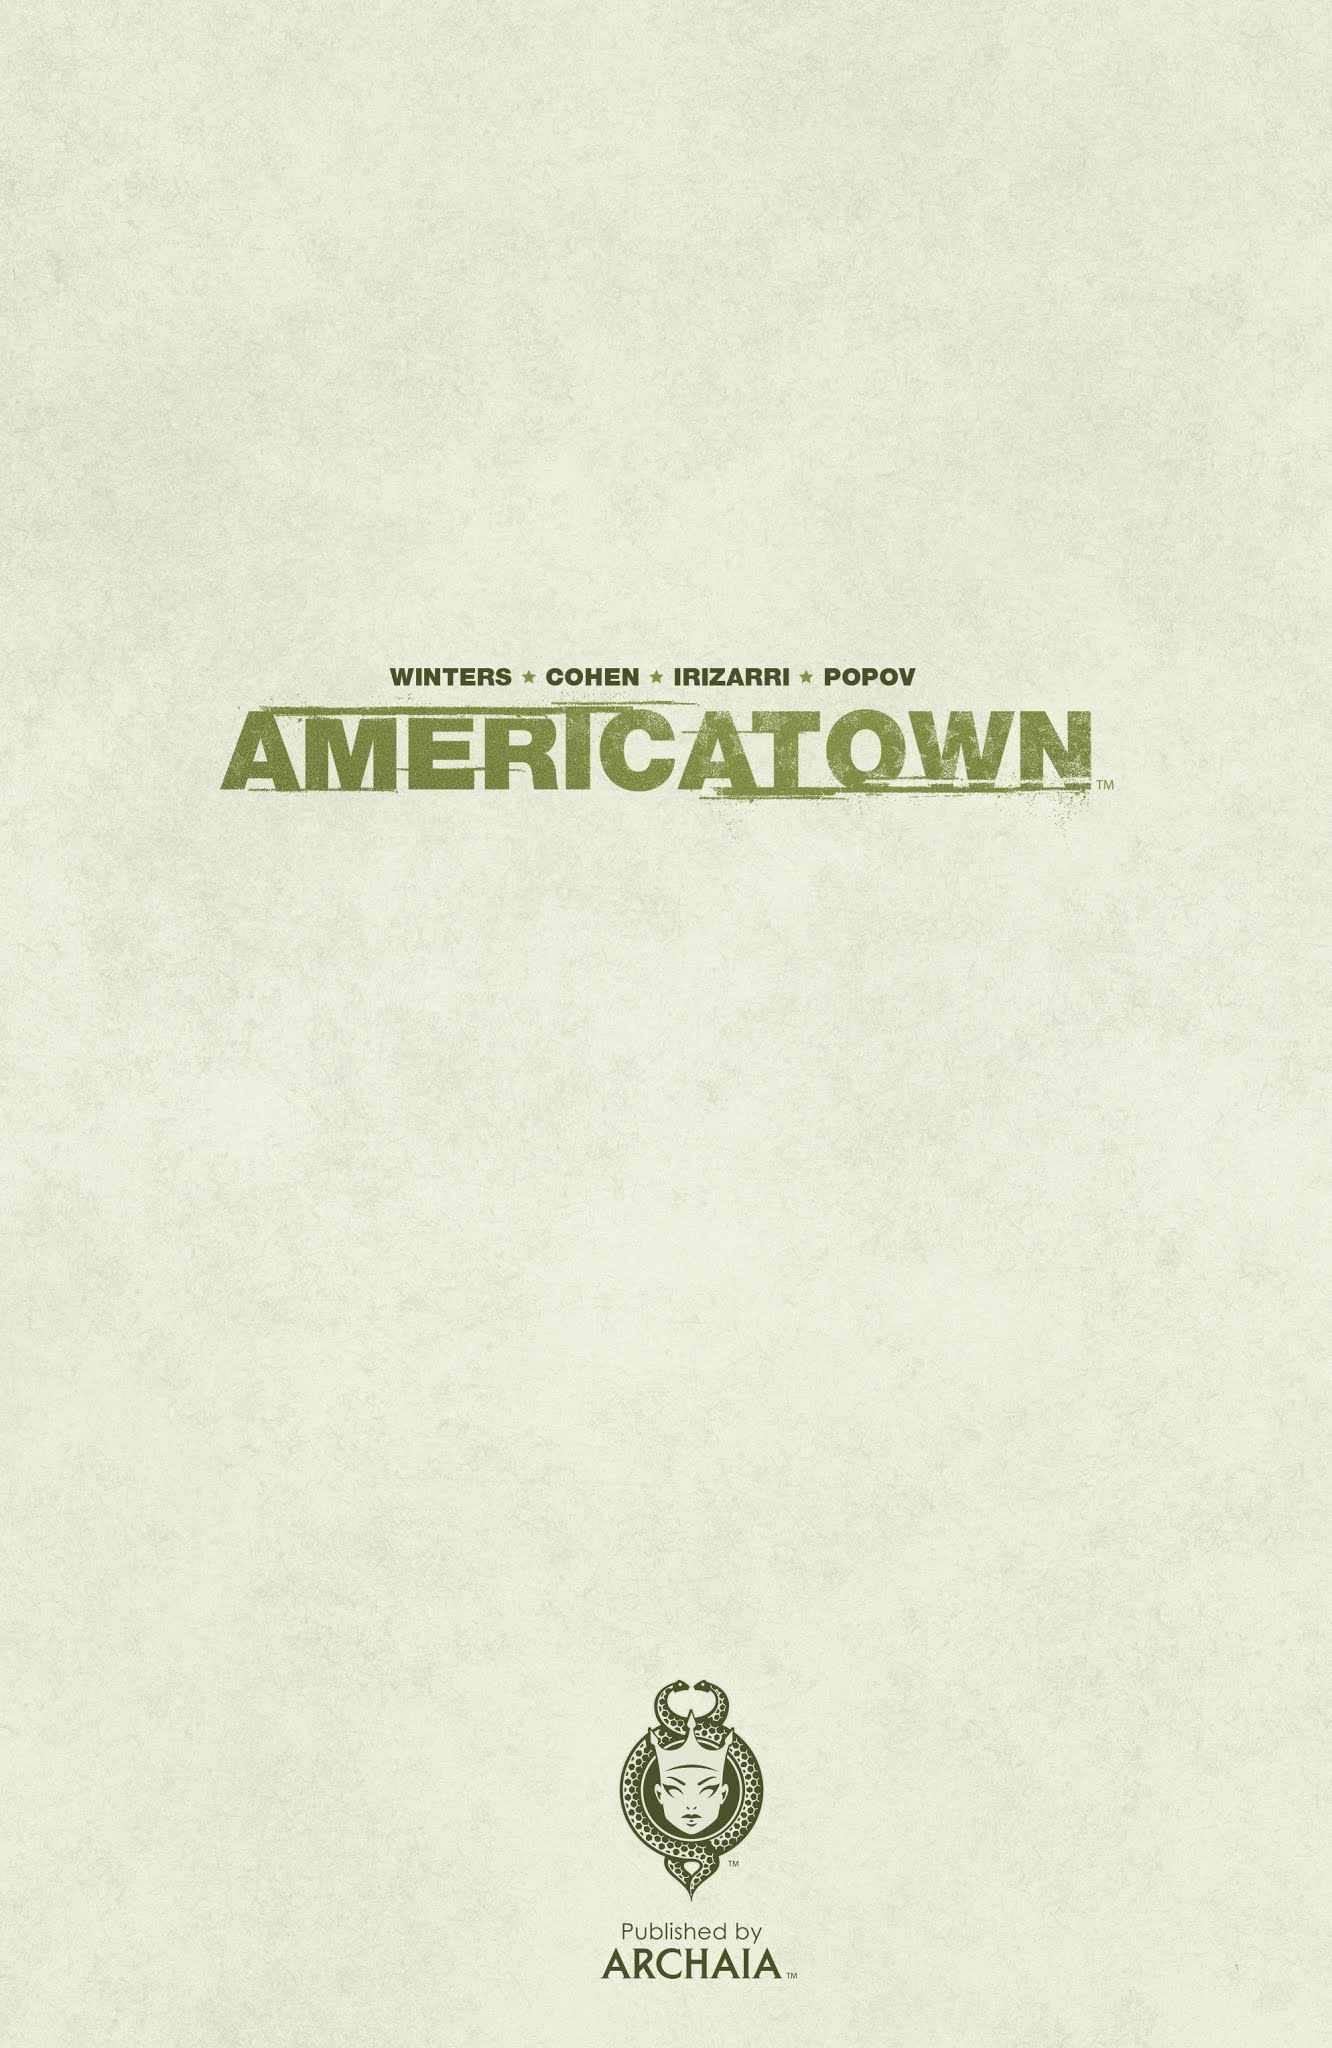 Read online Americatown comic -  Issue # TPB (Part 1) - 2